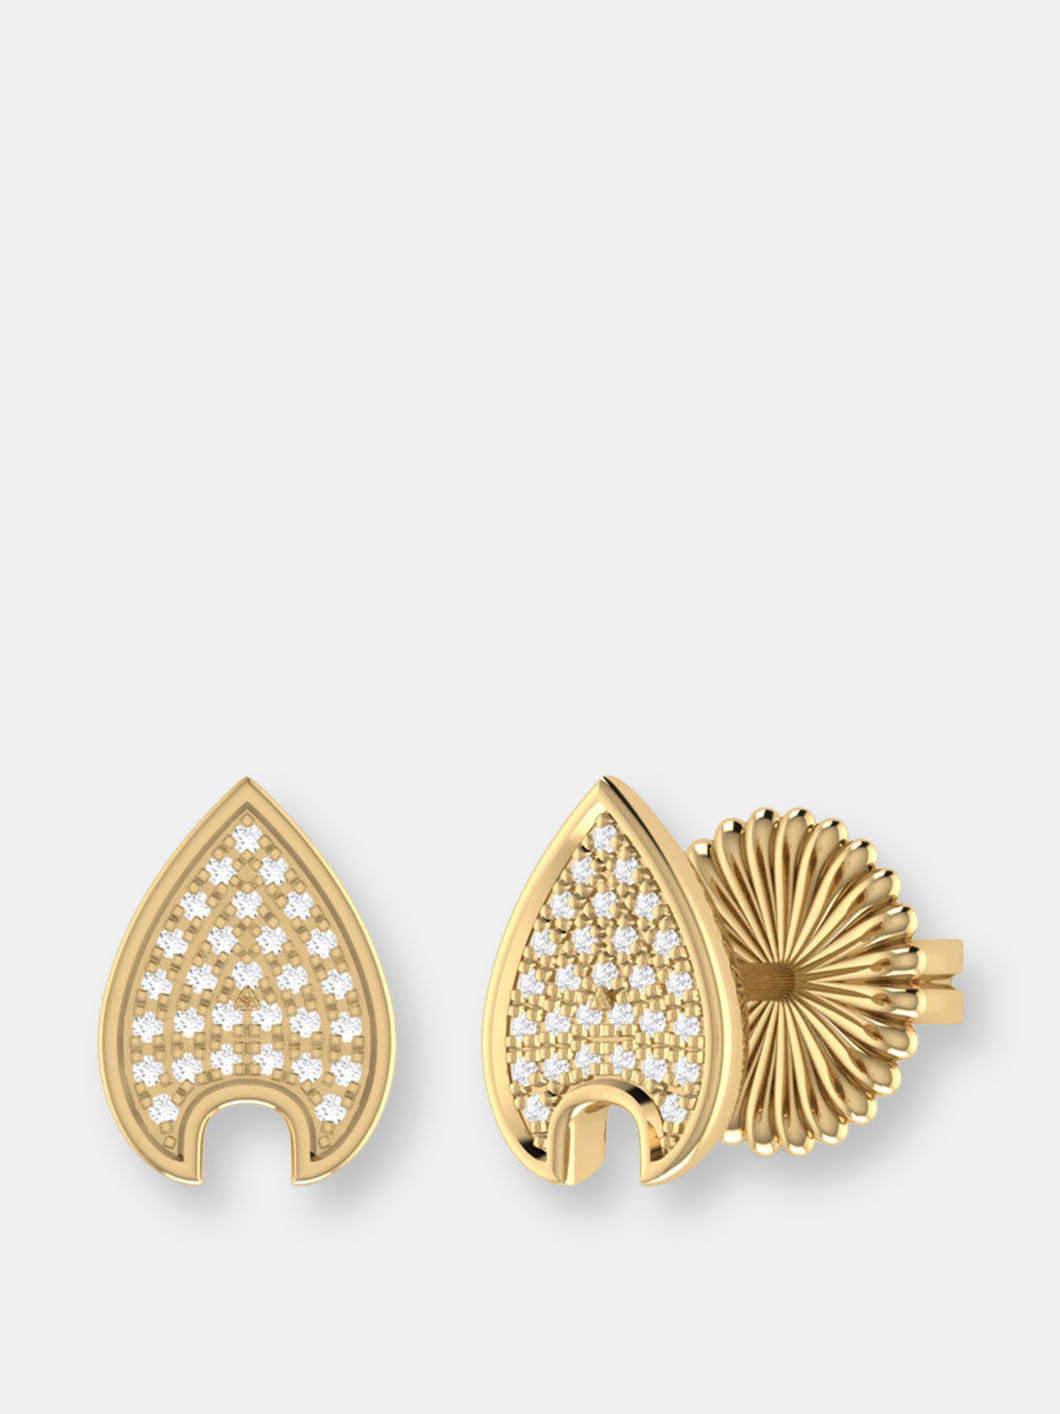 Raindrop Diamond Stud Earrings in 14K Yellow Gold Vermeil on Sterling Silver